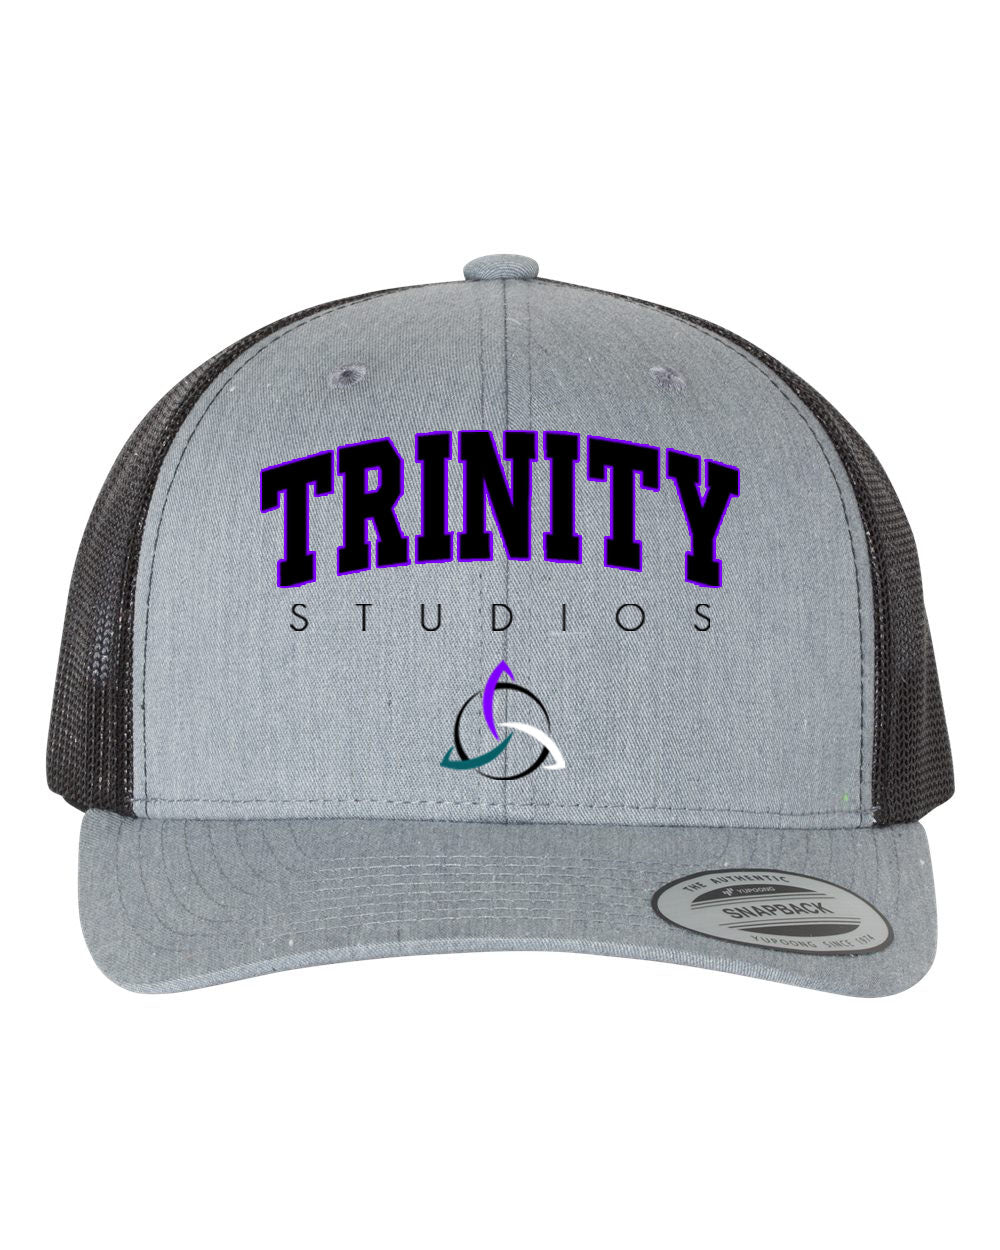 Trinity Design 5 Trucker Hat